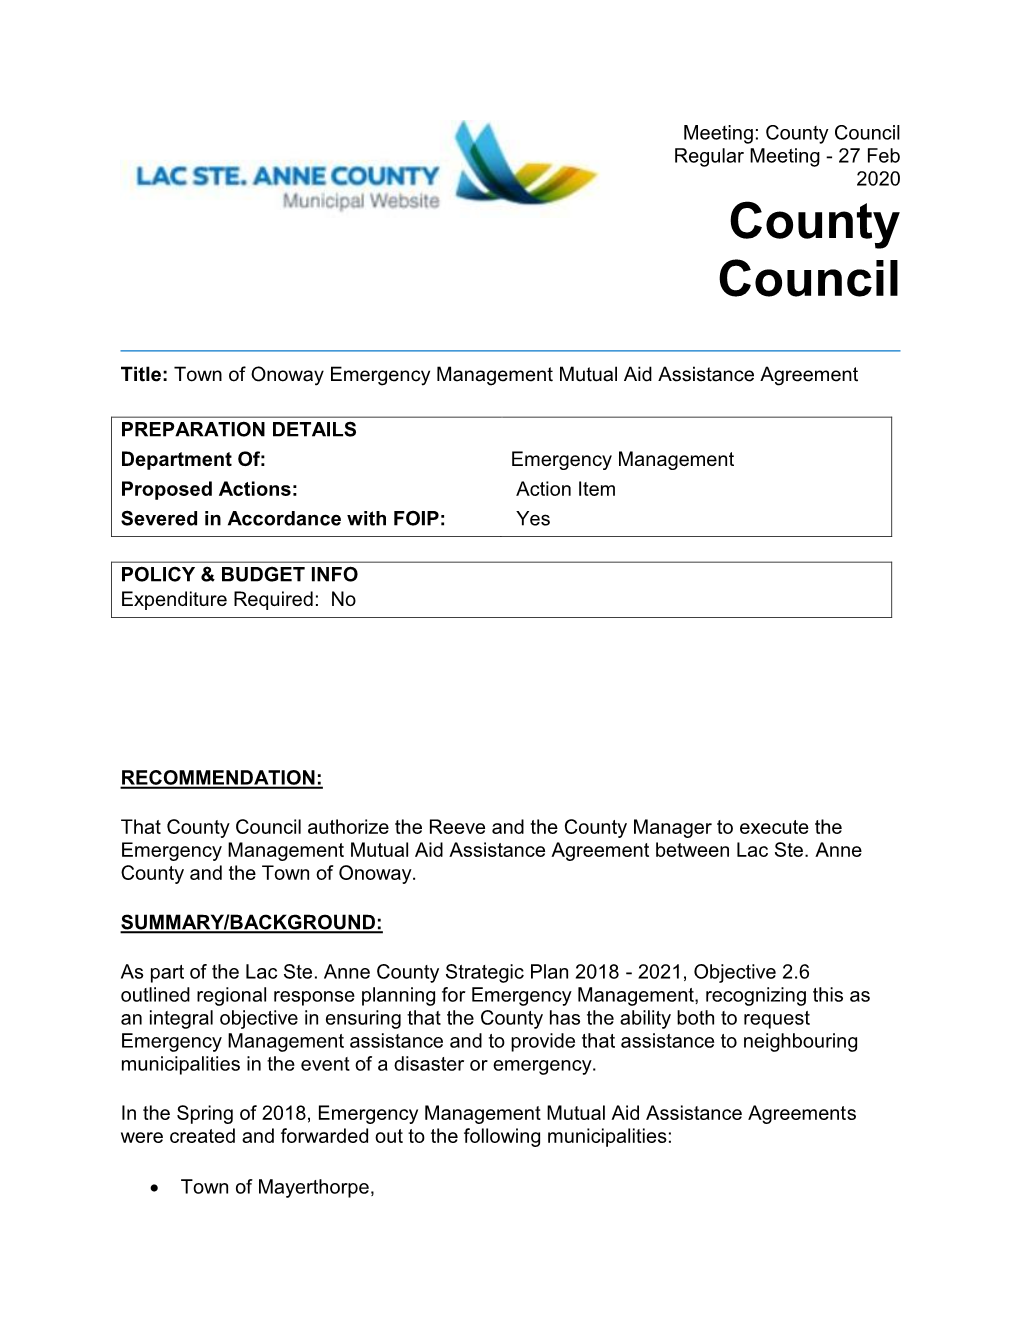 County Council Regular Meeting - 27 Feb 2020 County